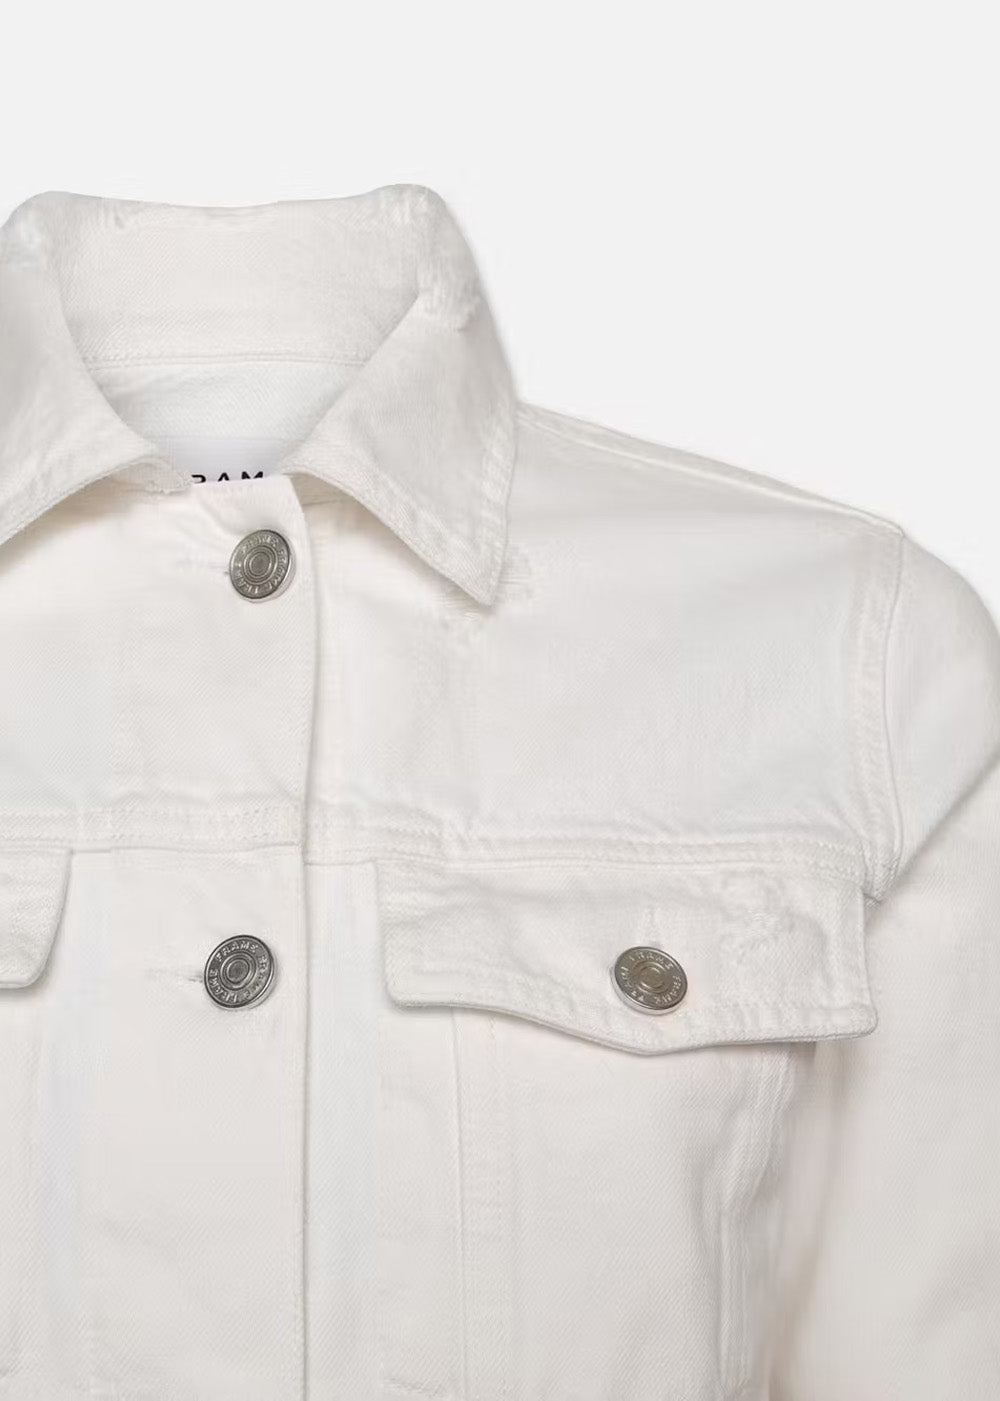 Le Vintage Women's Denim Jacket - White - Frame denim Canada - Danali - VDJ728-WTRP